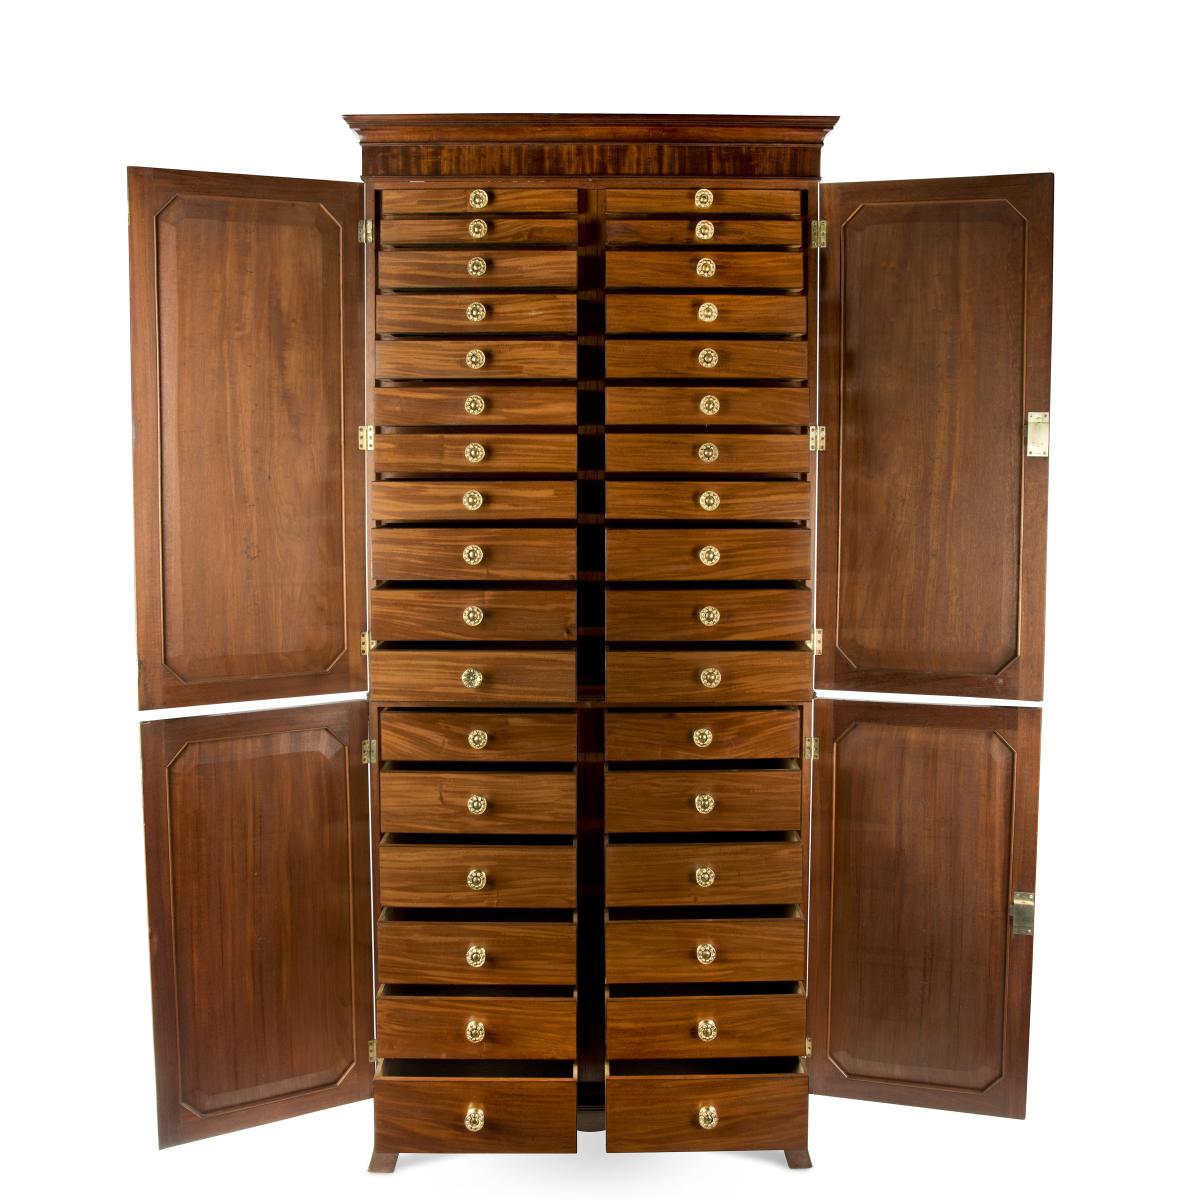 George III mahogany collector’s cabinet